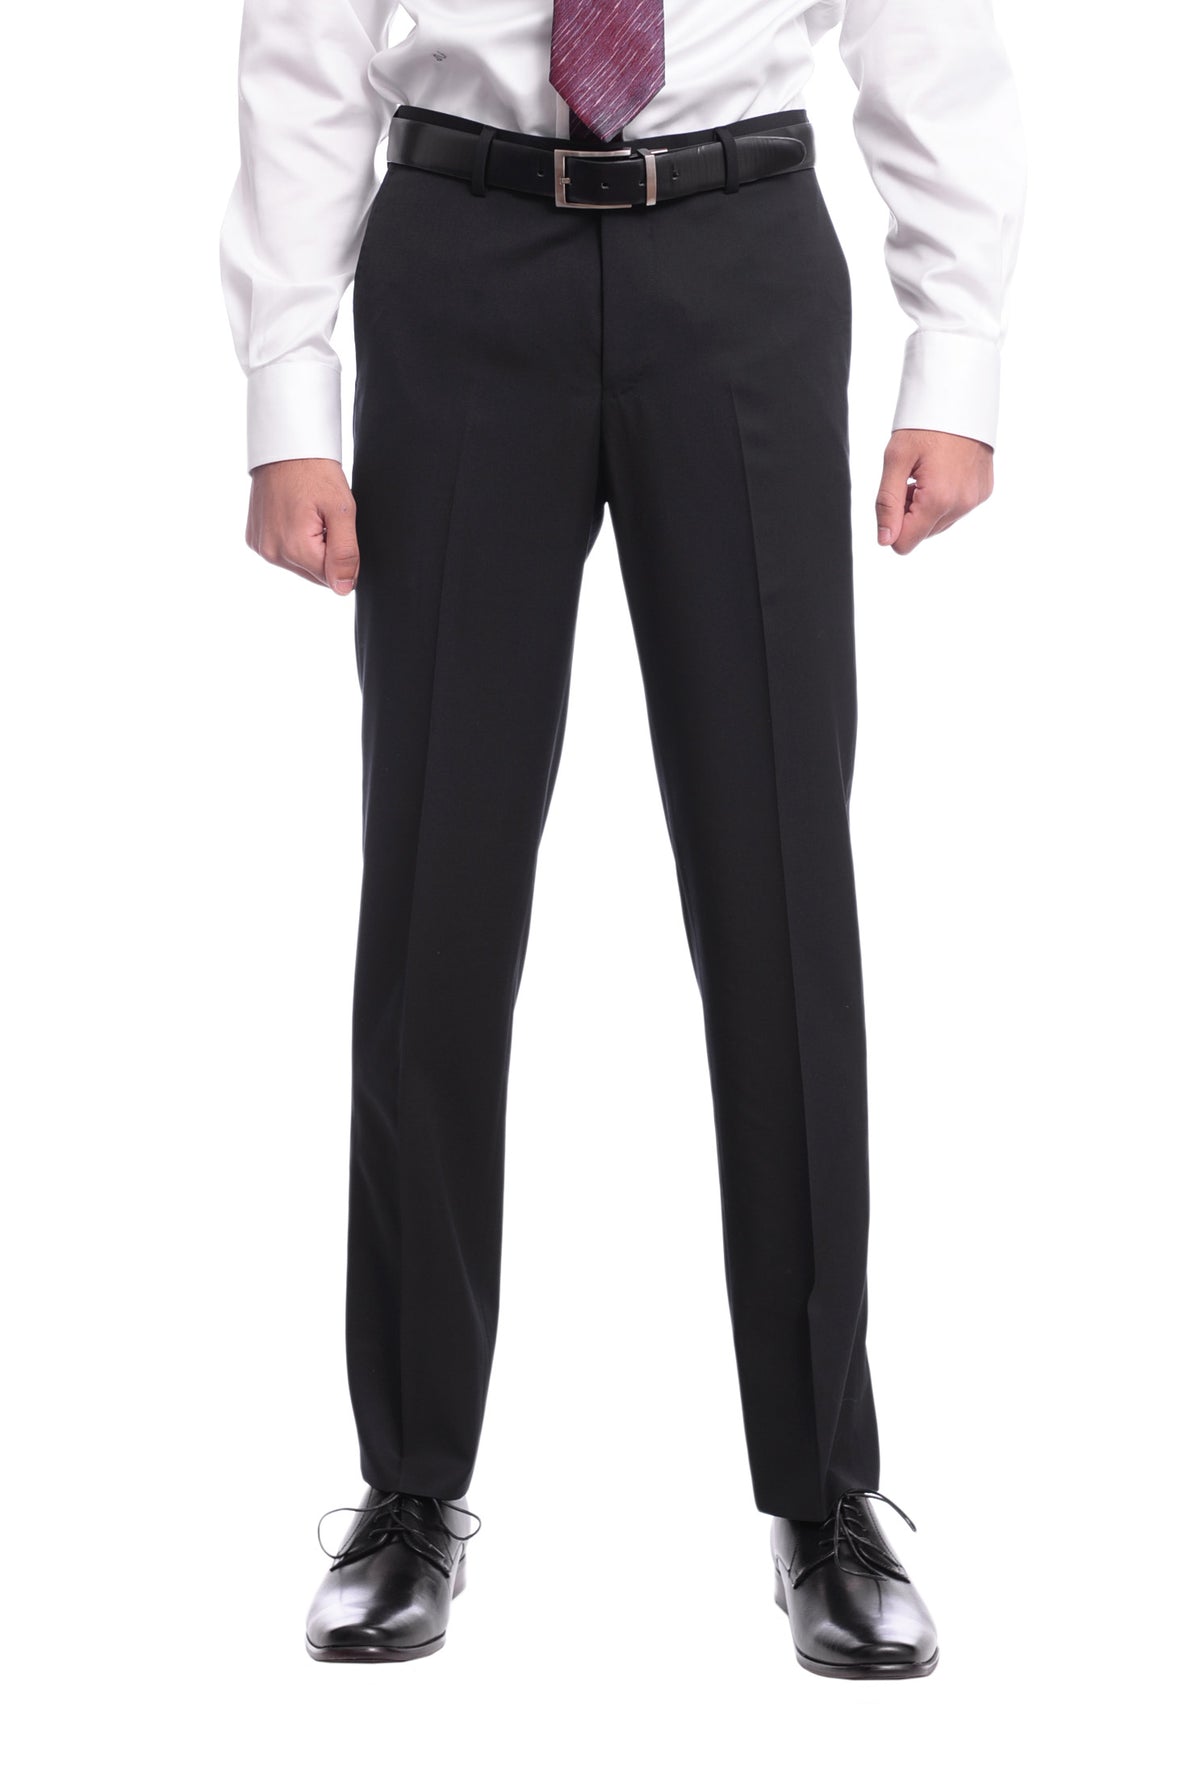 Napoli Slim Fit Solid Black Half Canvassed Wool Cashmere Suit With Peak Lapel